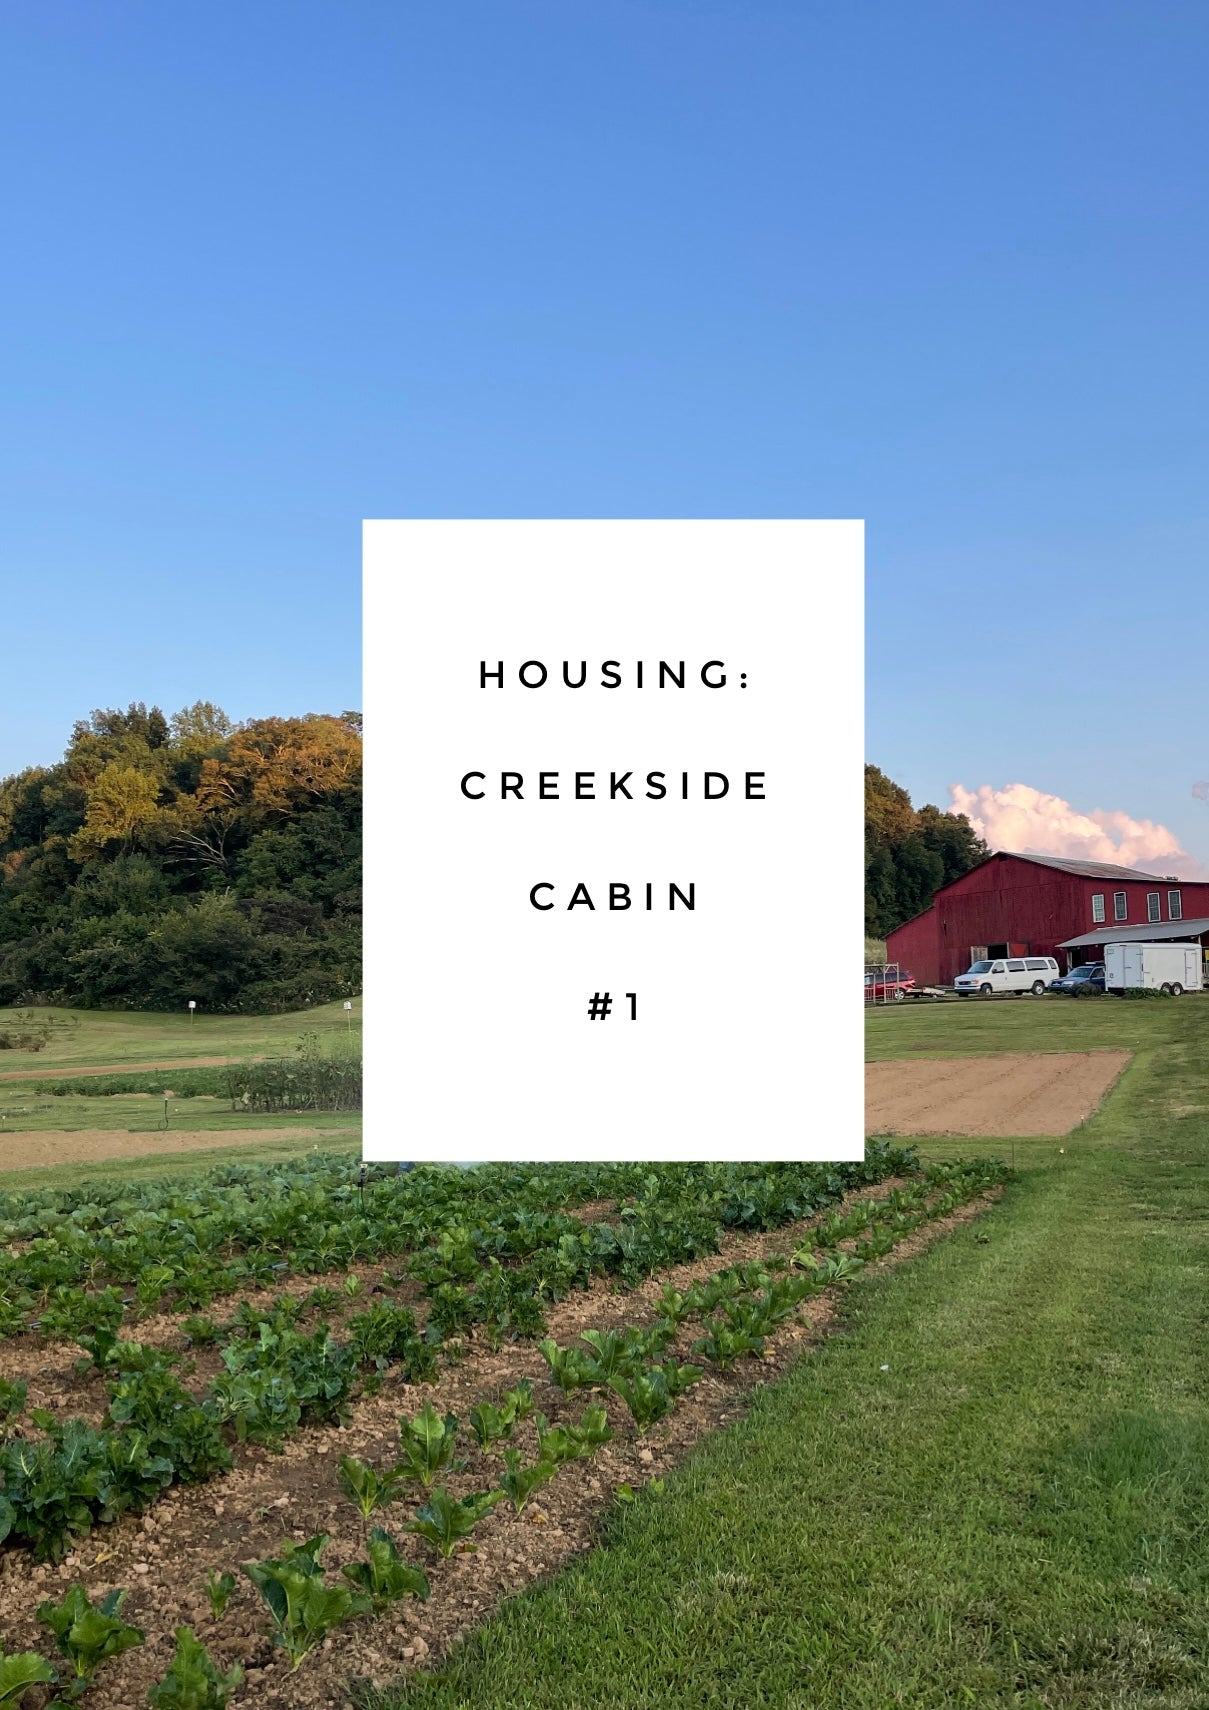 Creekside Cabin #1 - Intro to Market Gardening